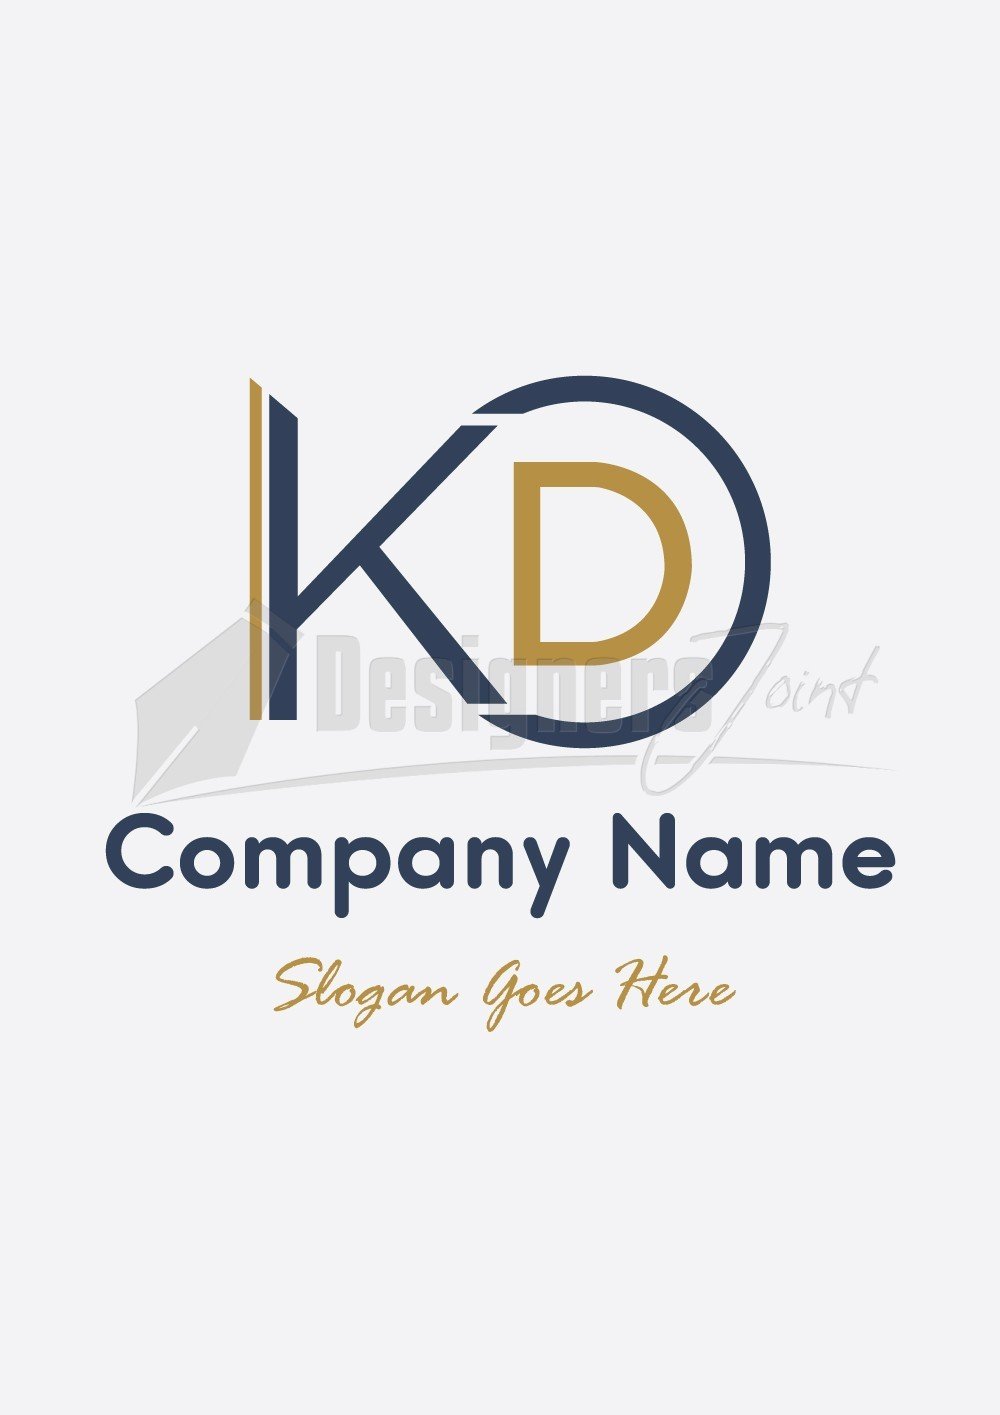 Gold Kd Logo White Background Kd Simple Logo Design Vector Initial Letter Logo  Design Vector Template Stock Illustration - Download Image Now - iStock